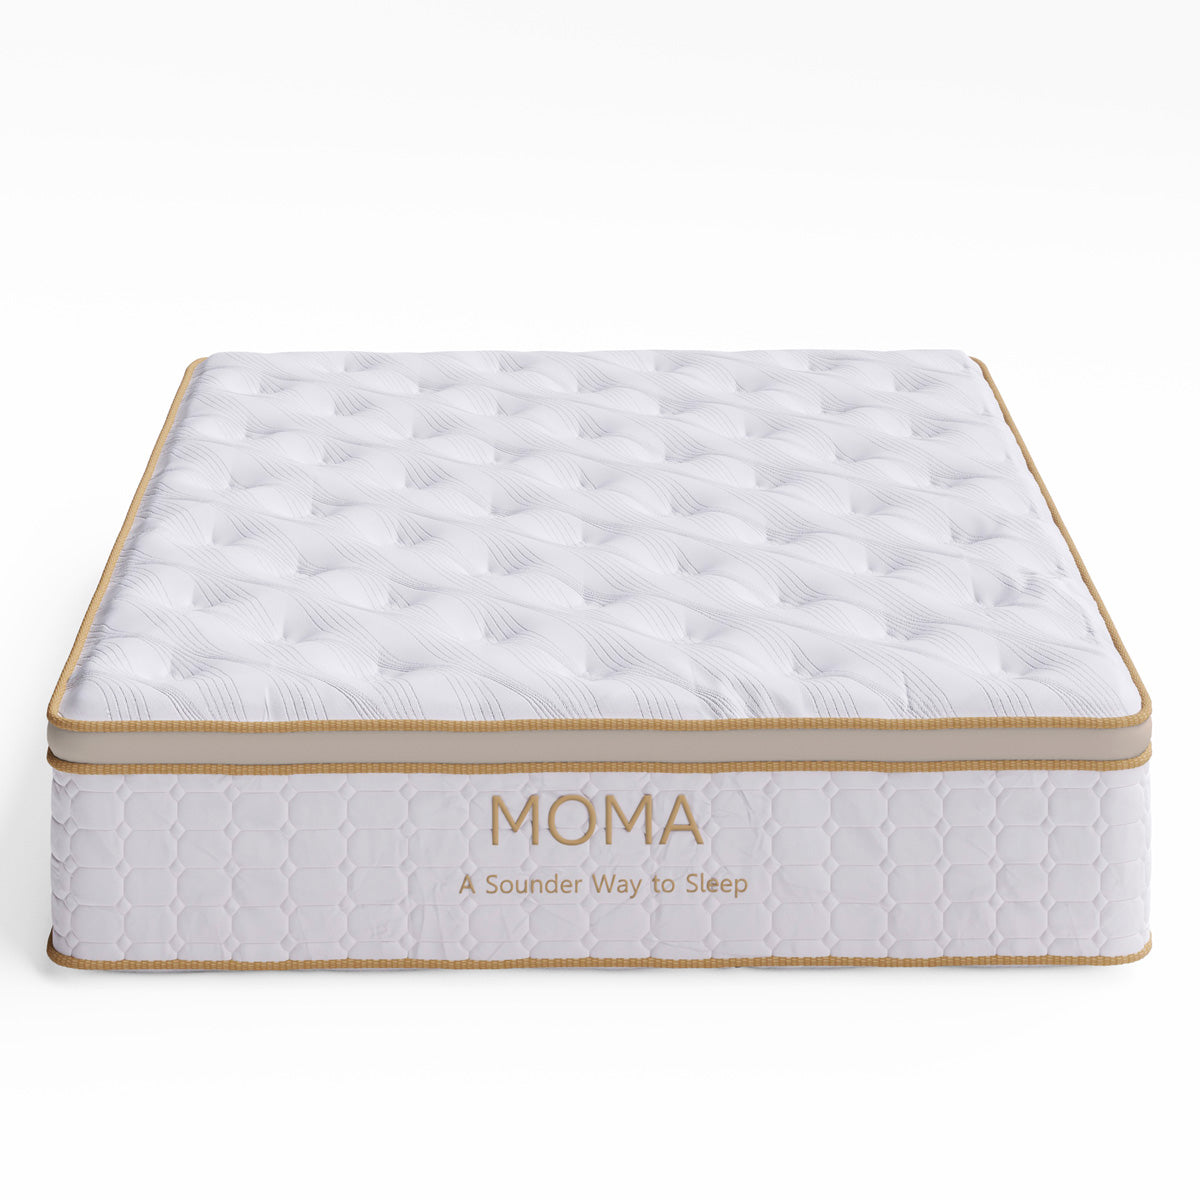 Moma Comfort Hybrid Mattress (Queen Size)